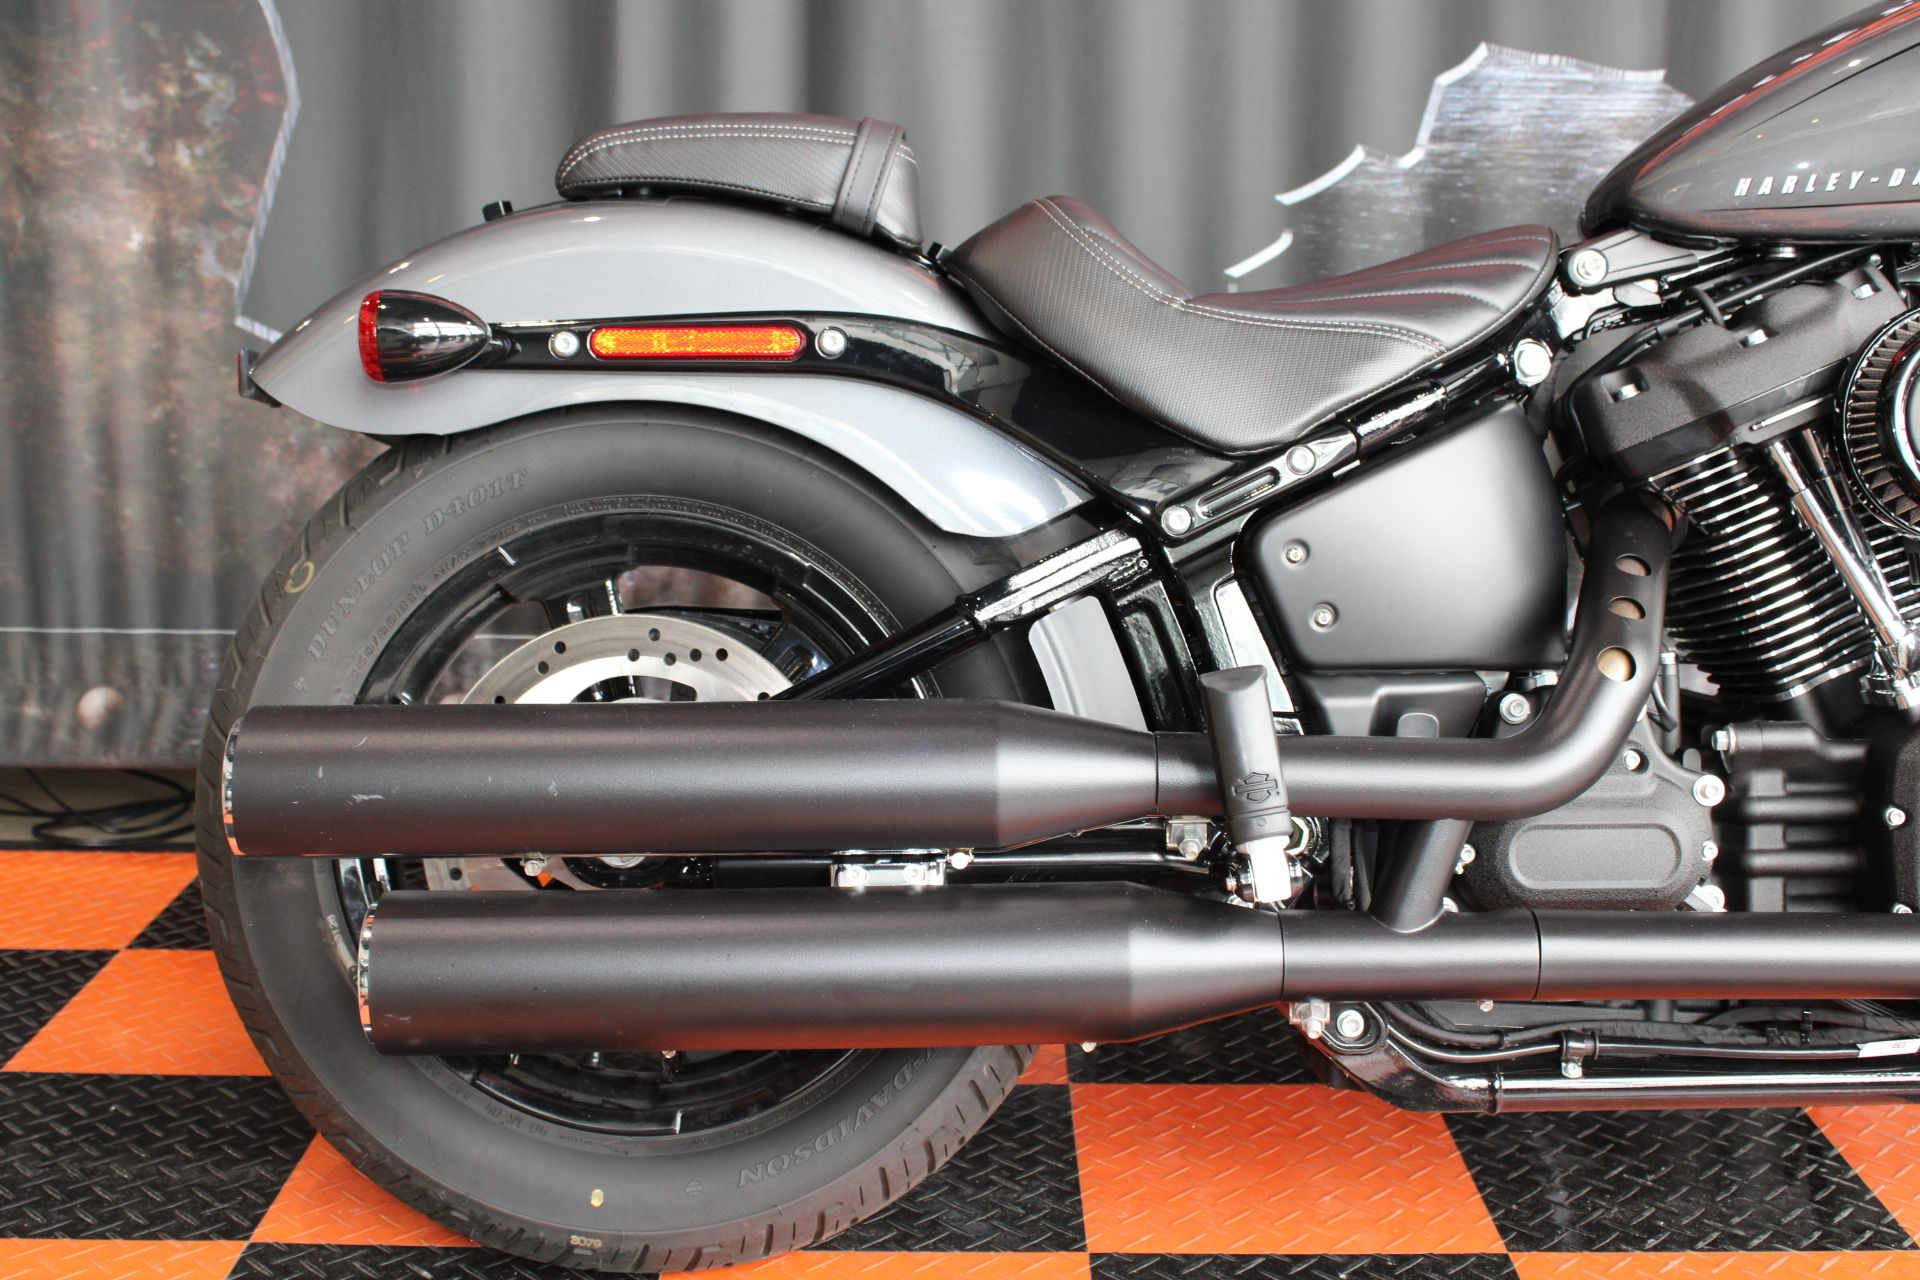 2022 Harley-Davidson Street Bob® 114 in Shorewood, Illinois - Photo 15